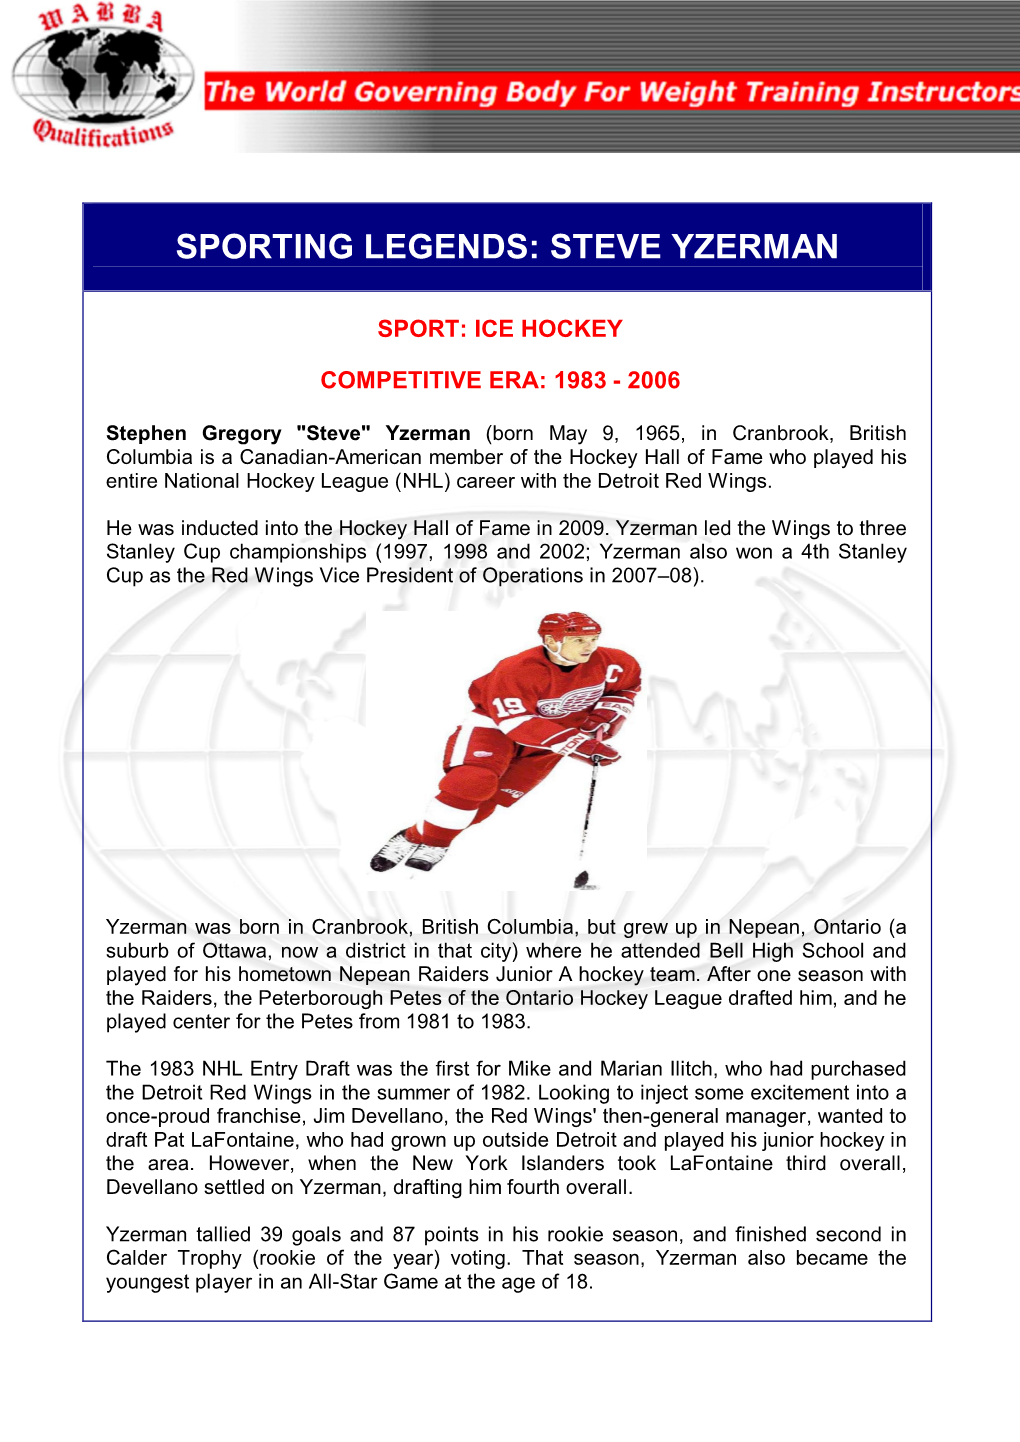 Sporting Legends: Steve Yzerman